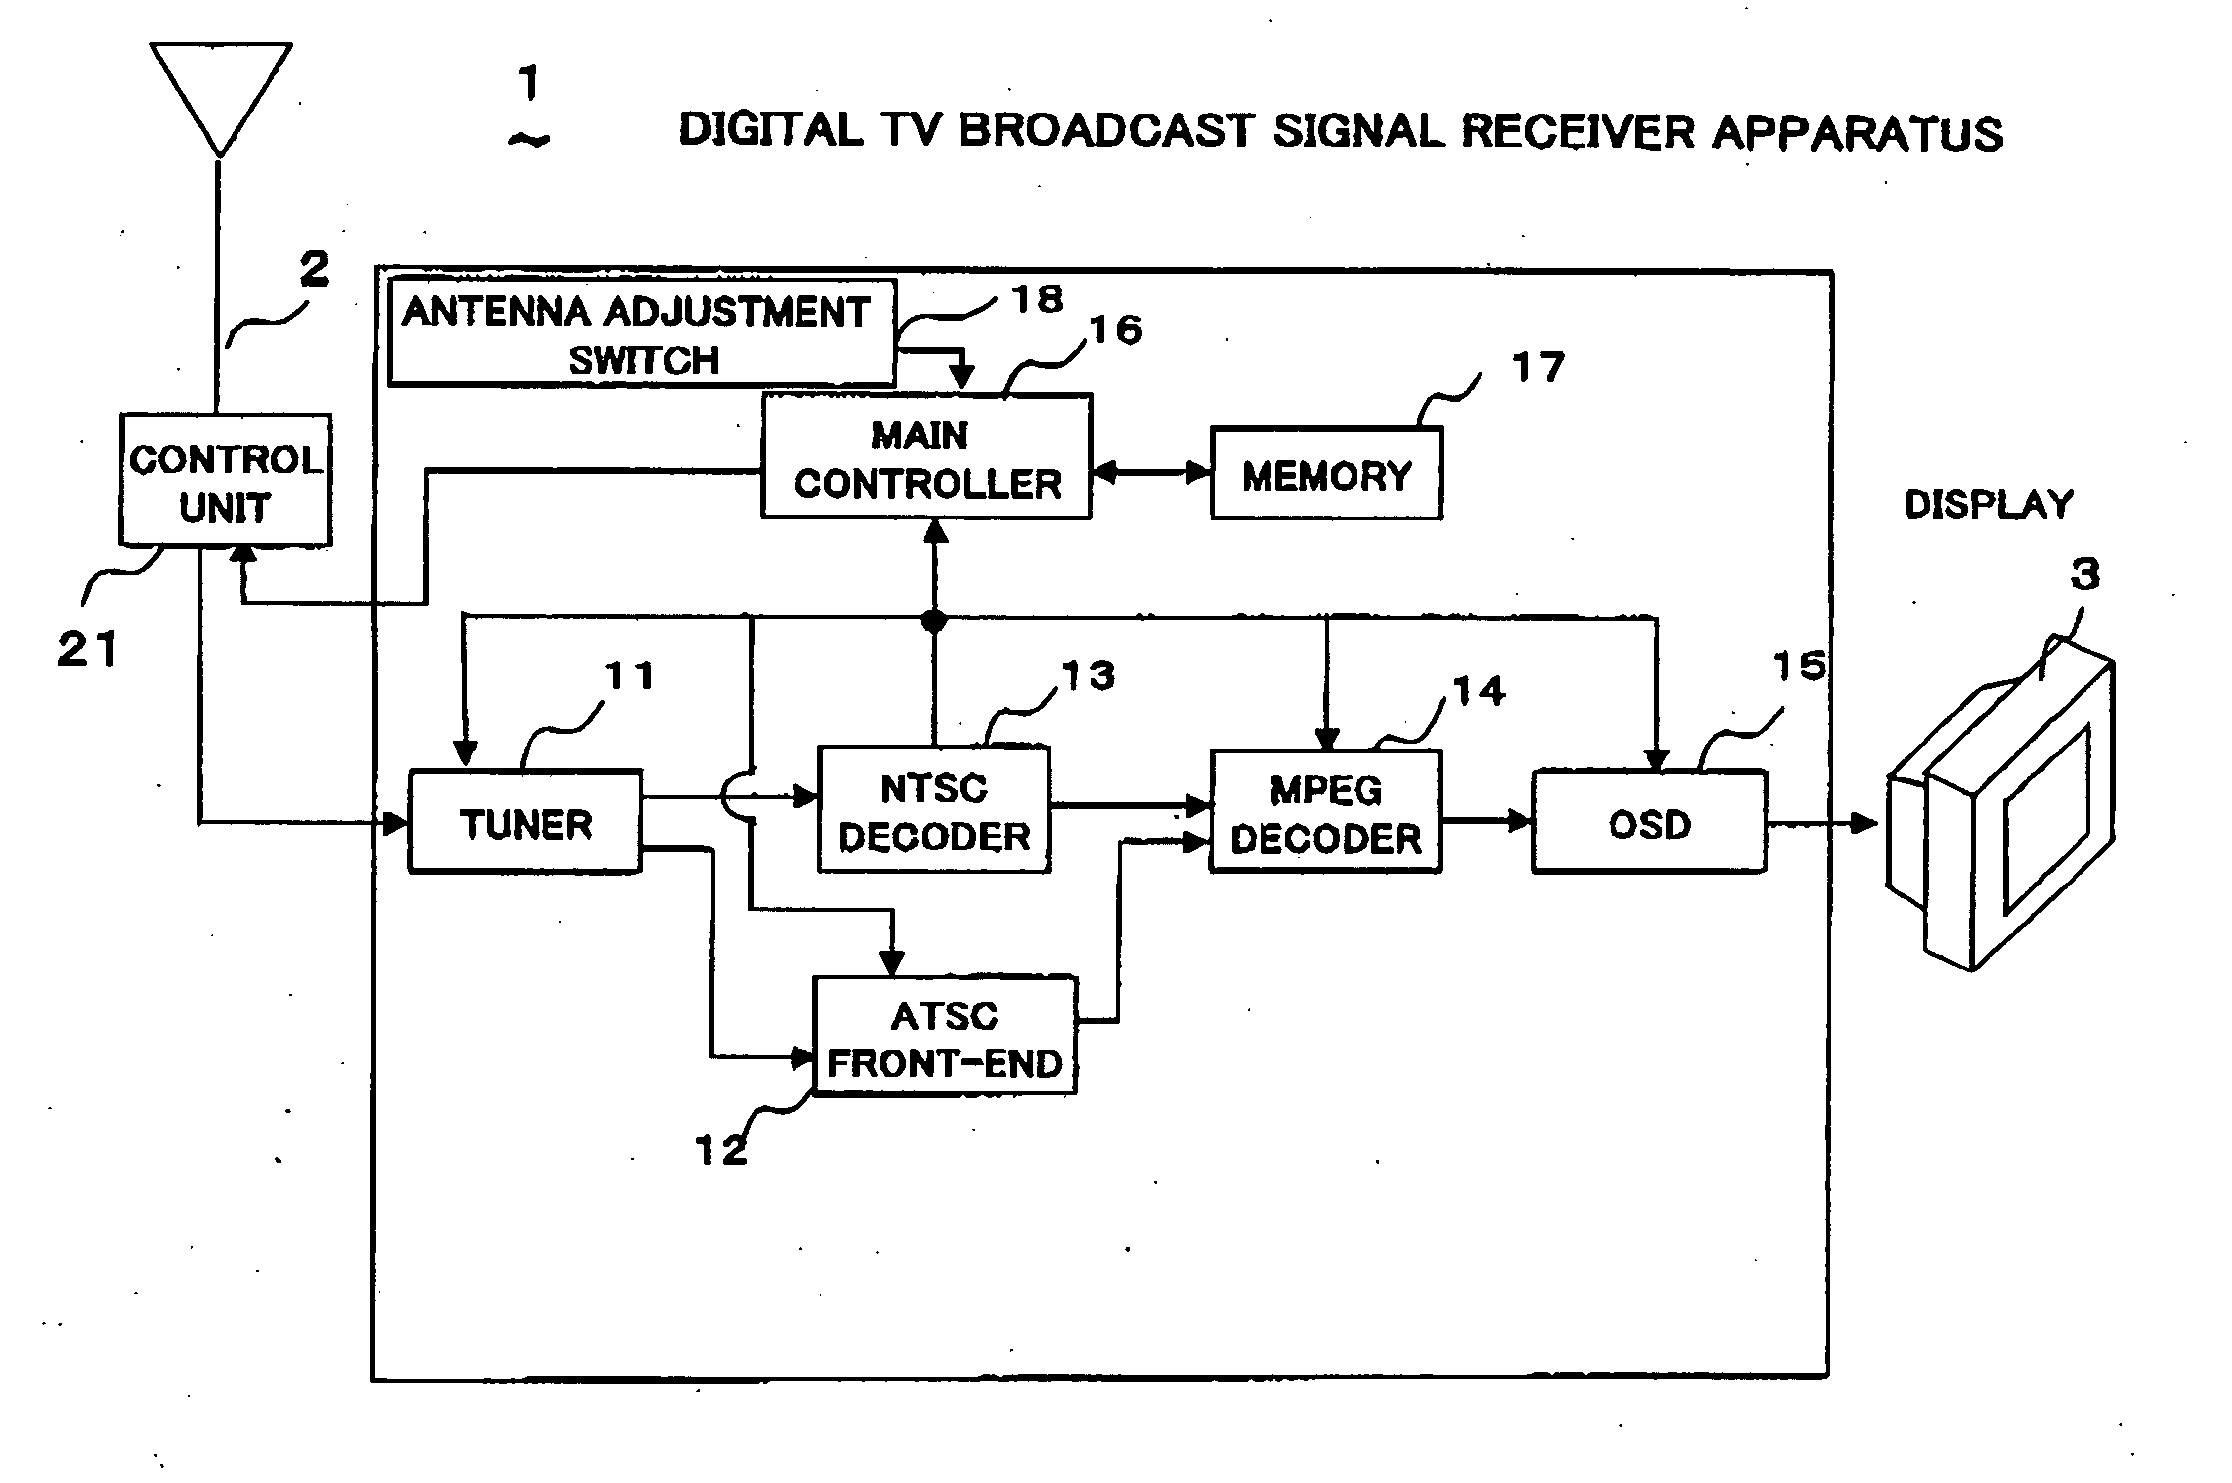 Digital television broadcast signal receiver